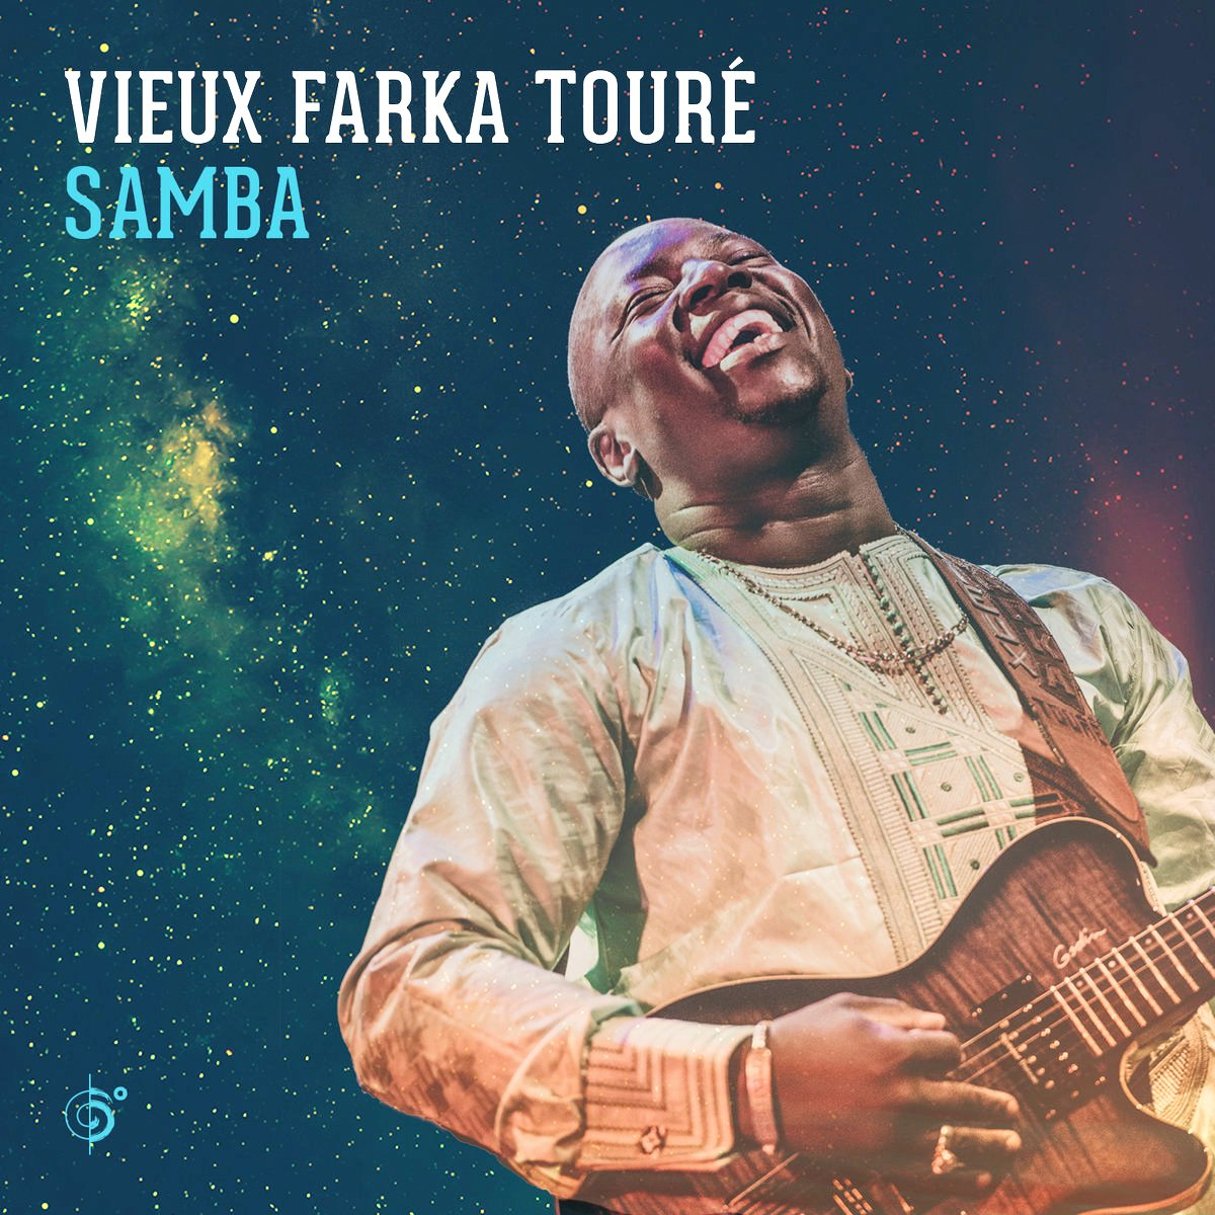 Samba, Vieux Farka Touré, Woodstock Sessions © DR